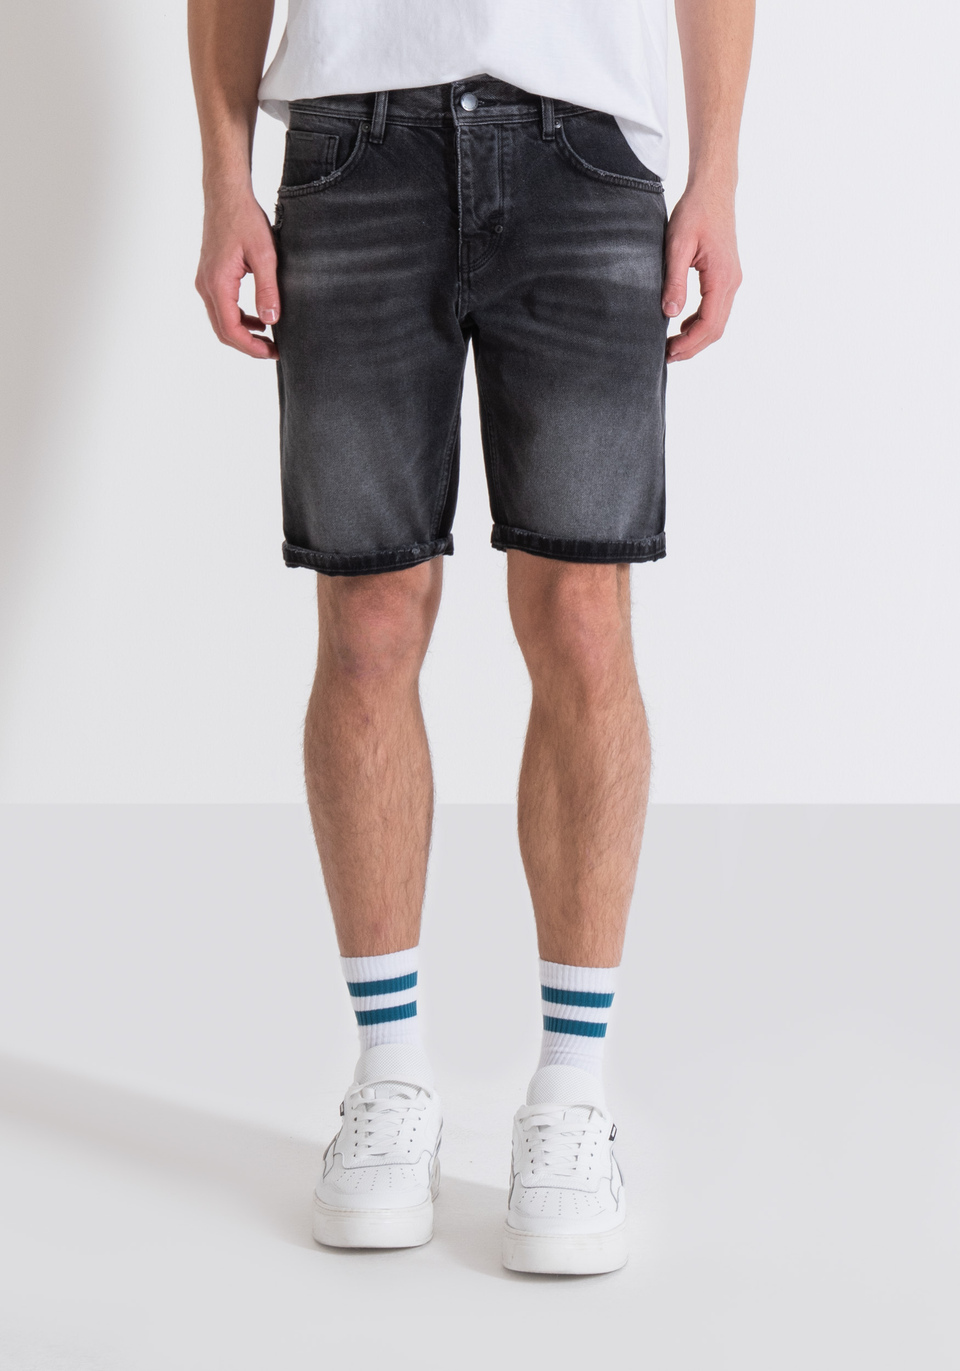 LONGBIDA Men's Slim Fit Casual Moto Denim Shorts Stretch Cool Summer Biker  Jeans Short, Blue, 30 price in UAE | Amazon UAE | kanbkam